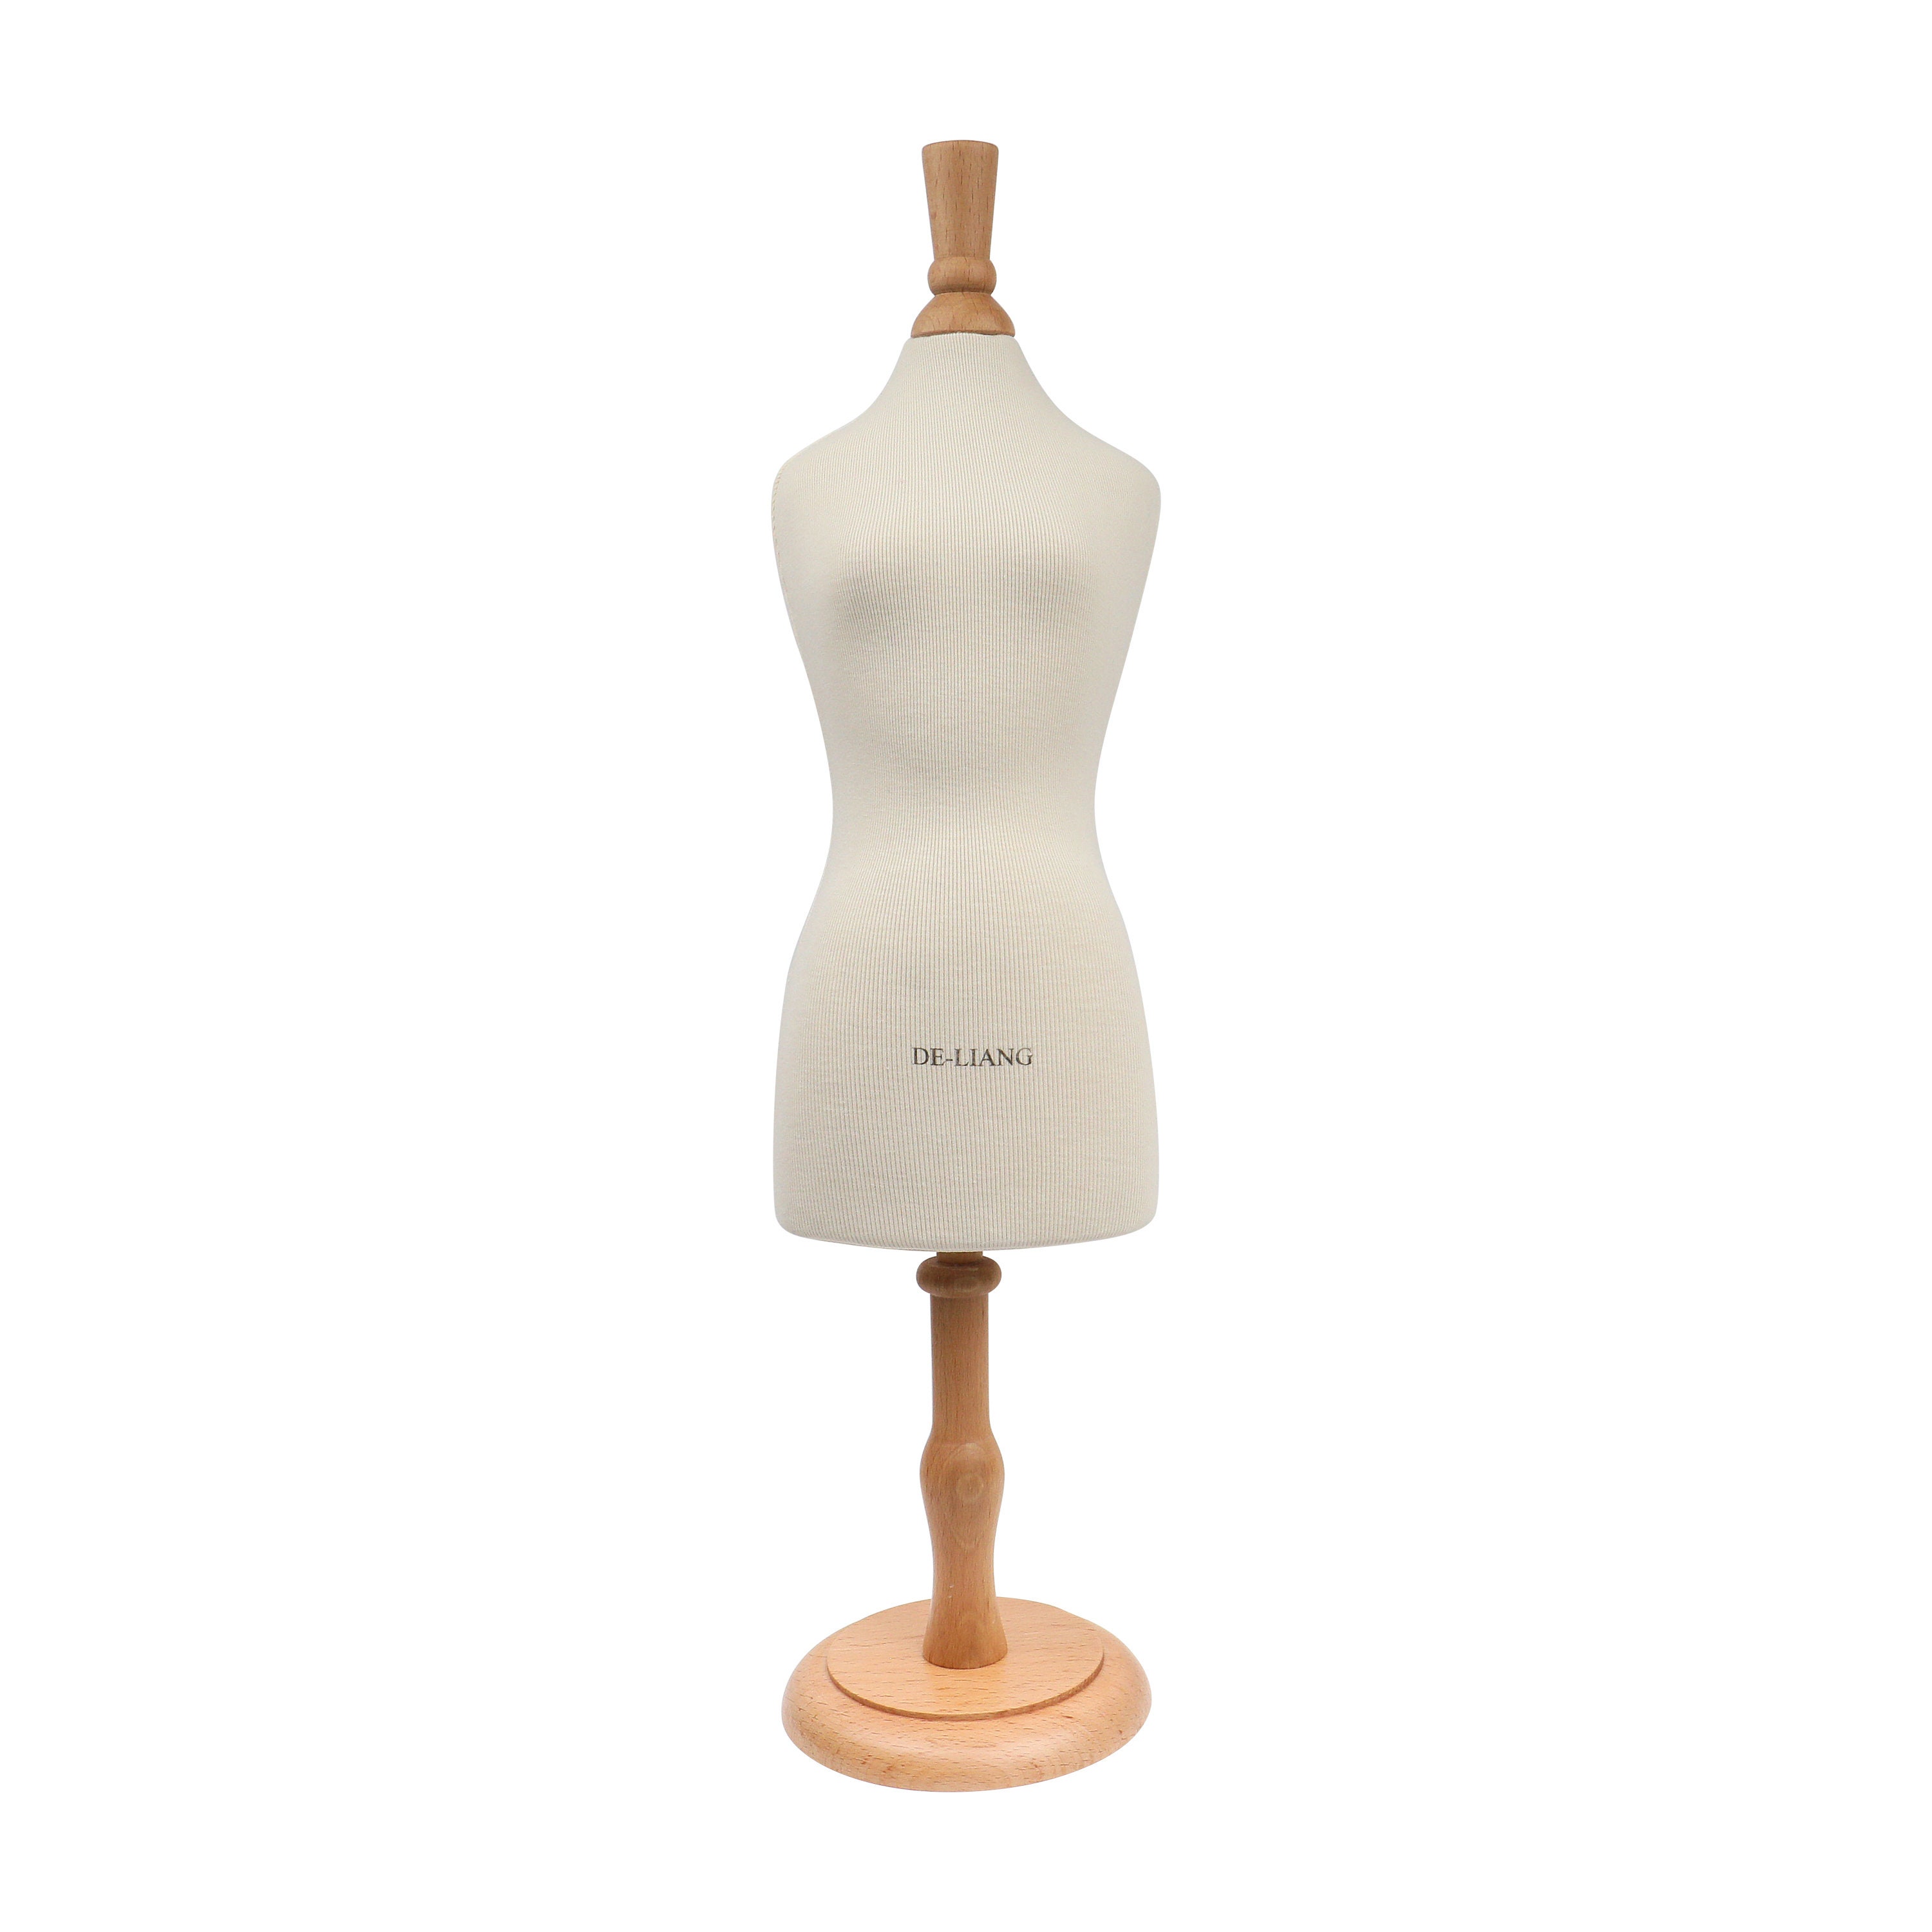 Head Styrofoam Mannequins & Dress Forms for sale